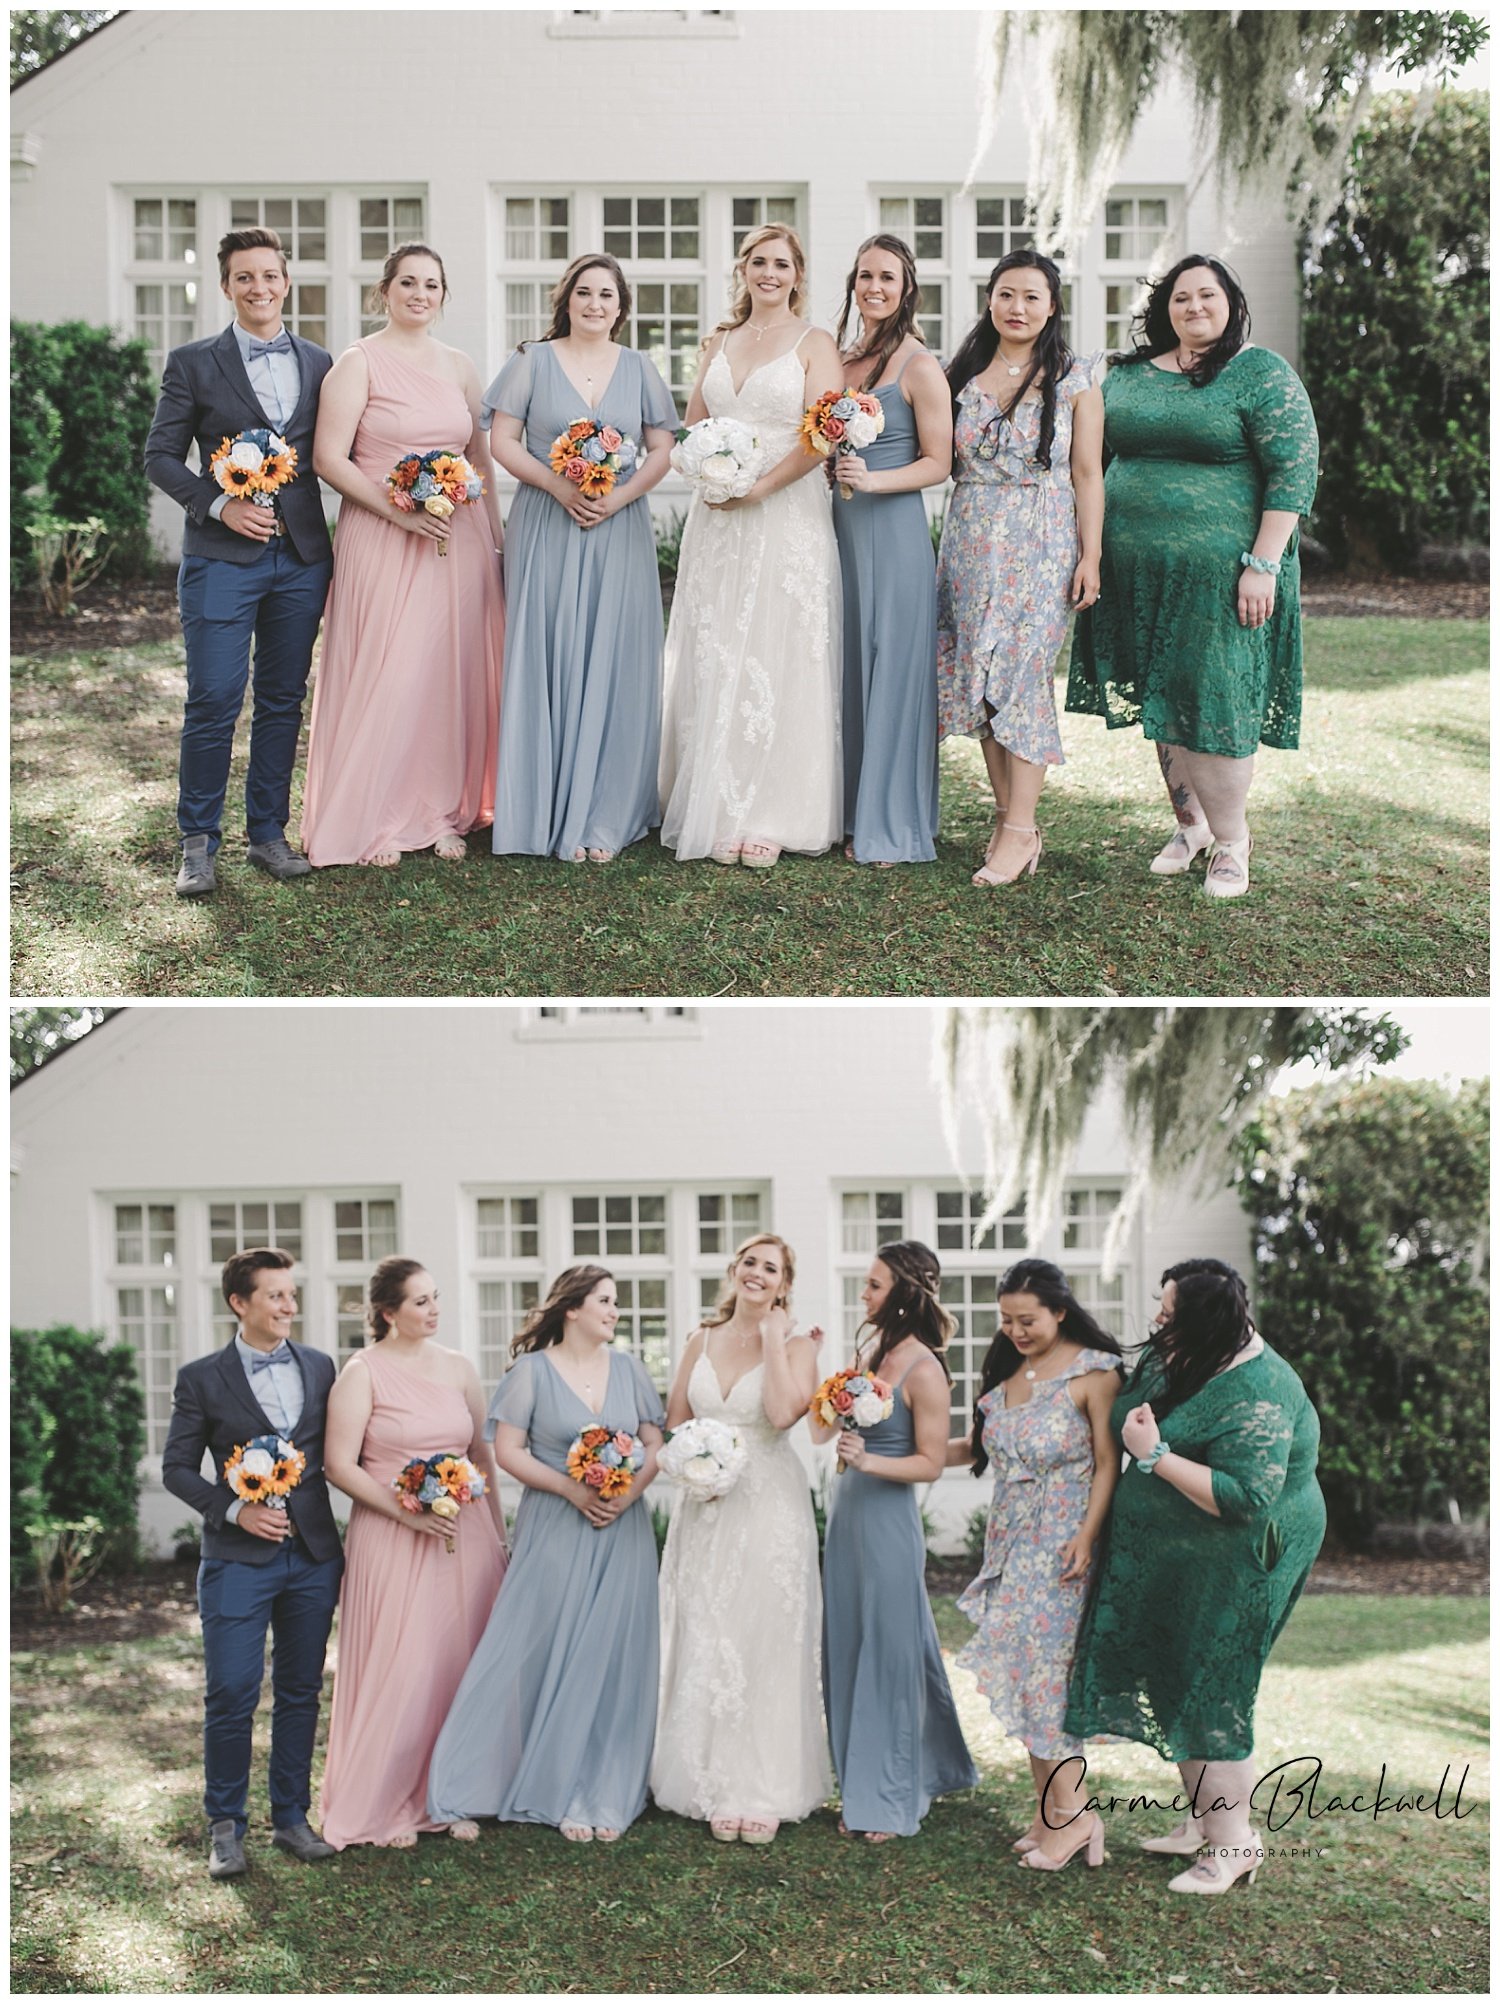 Weddings at Adams Estate Lake Alfred, FL- Carmela Blackwell Photography_0245.jpg